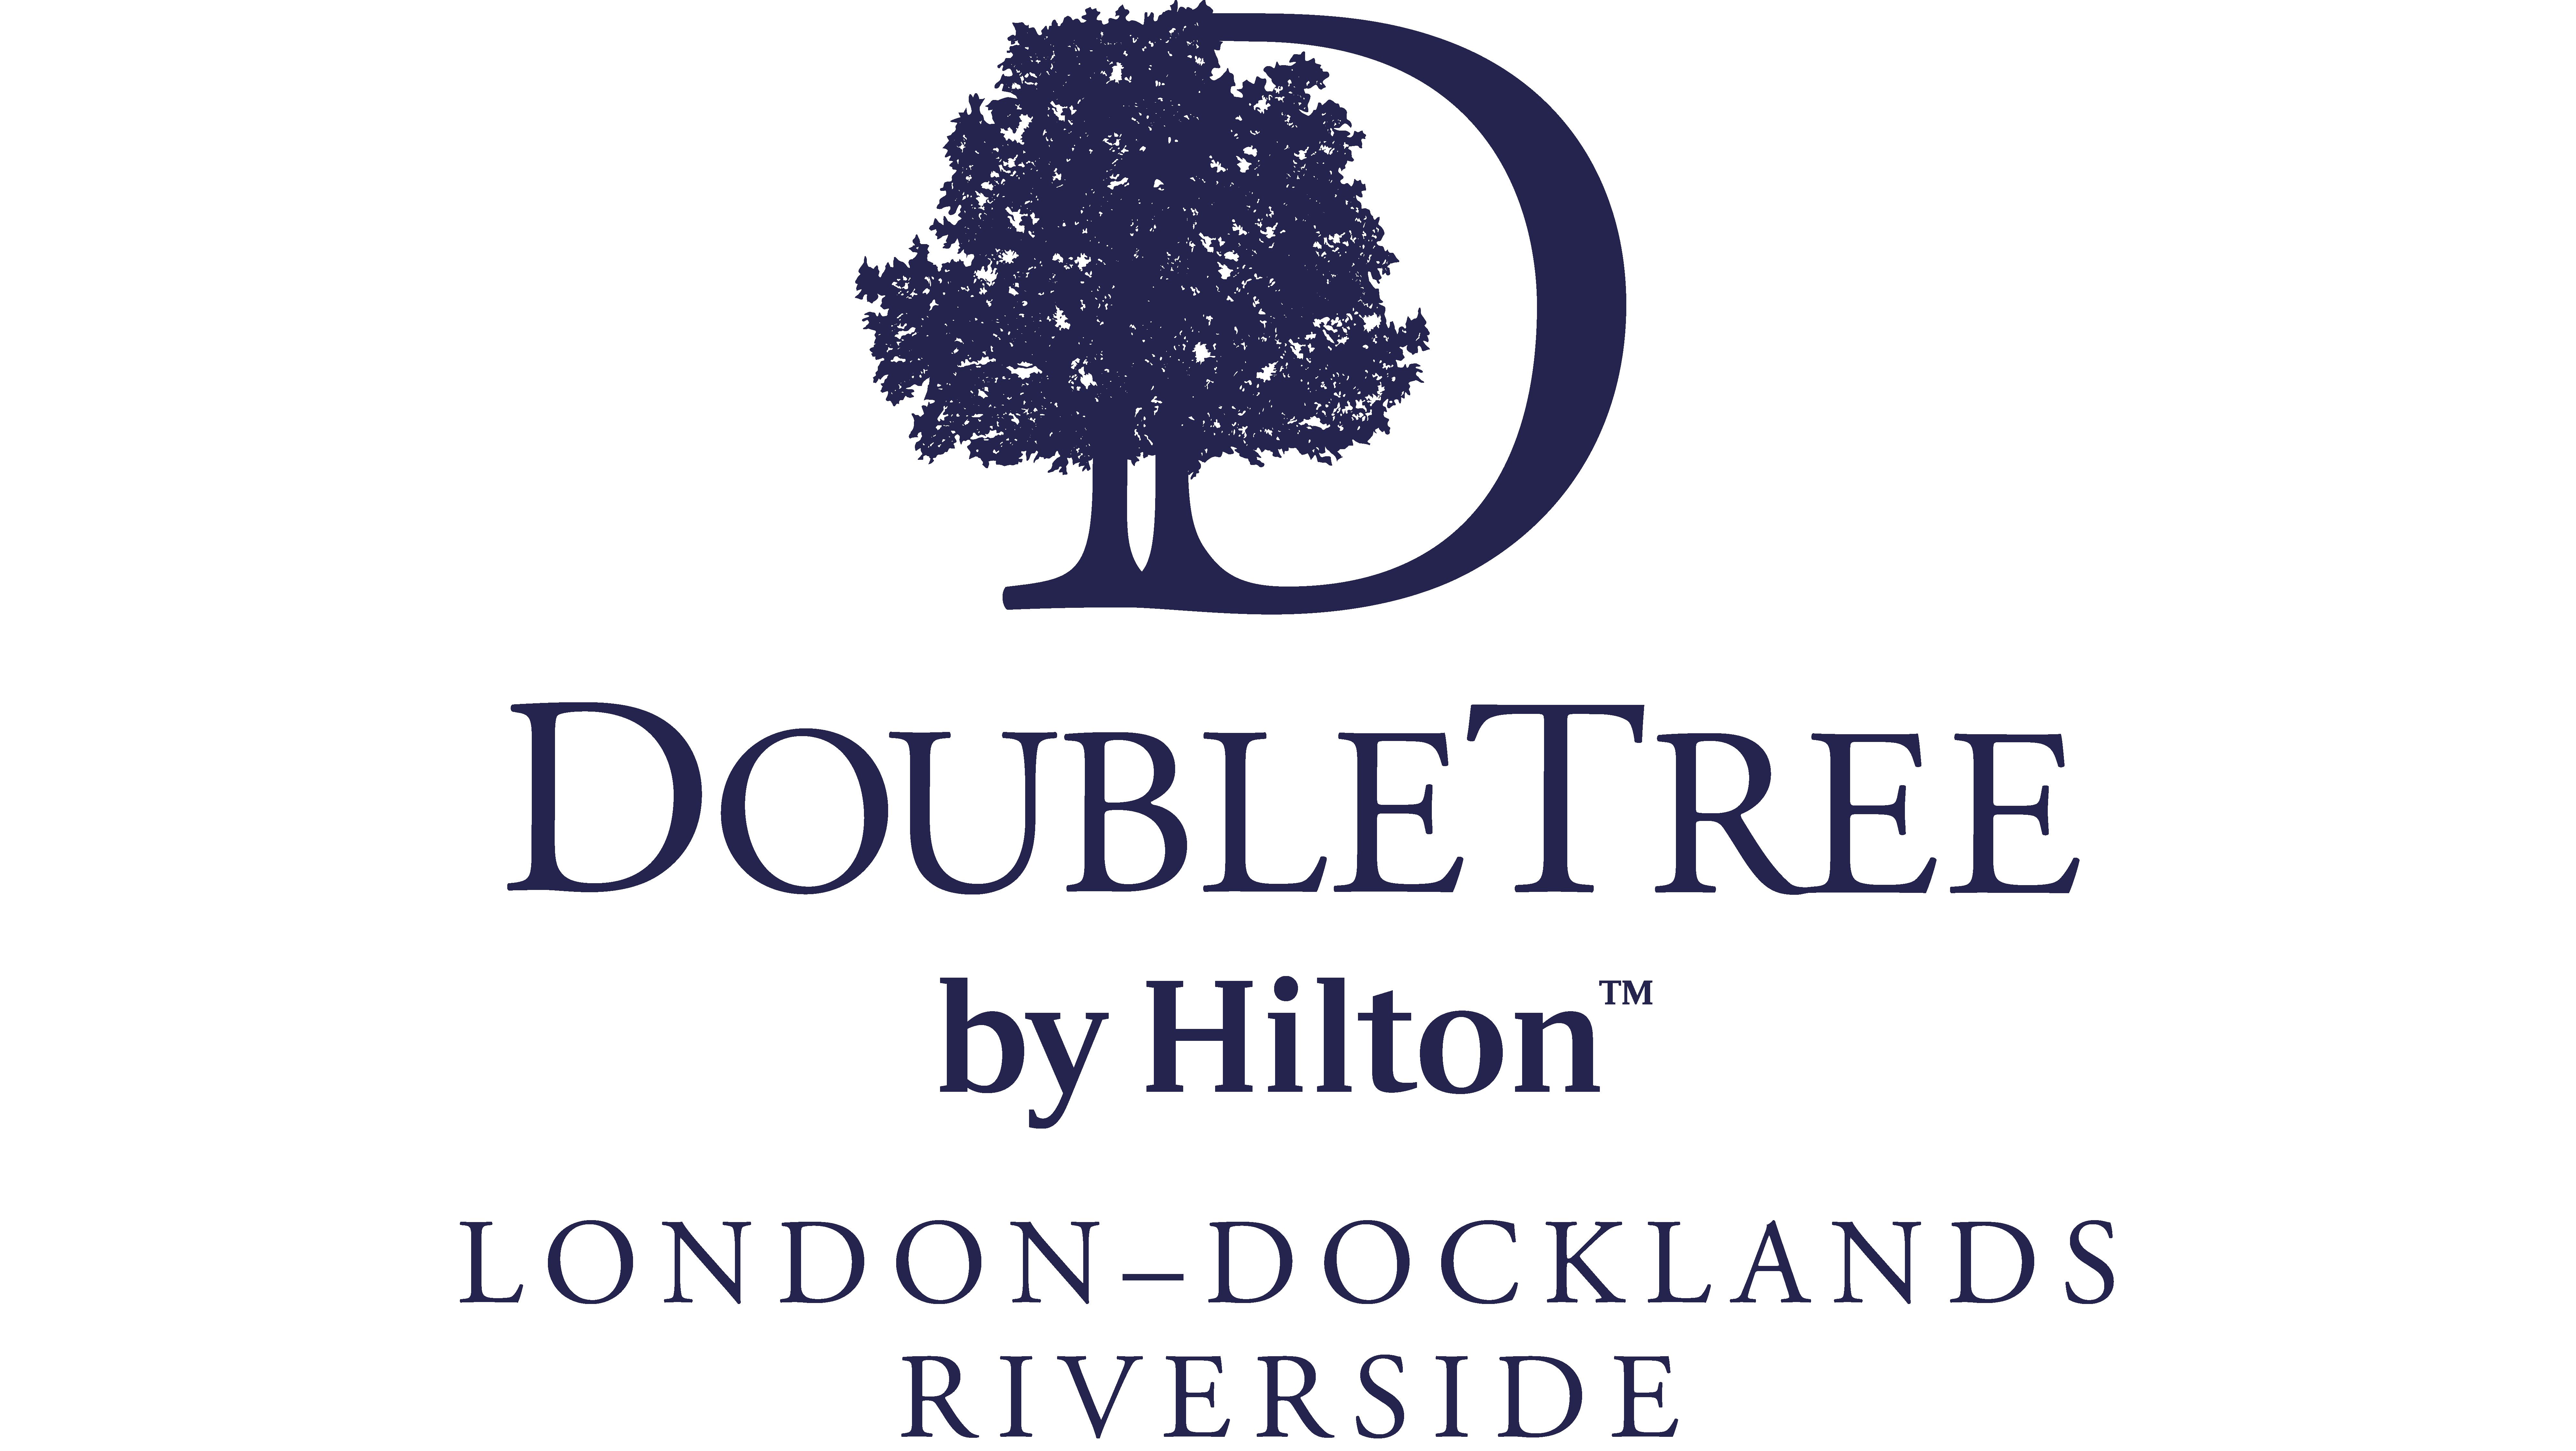 Doubletree by Hilton - London Docklands